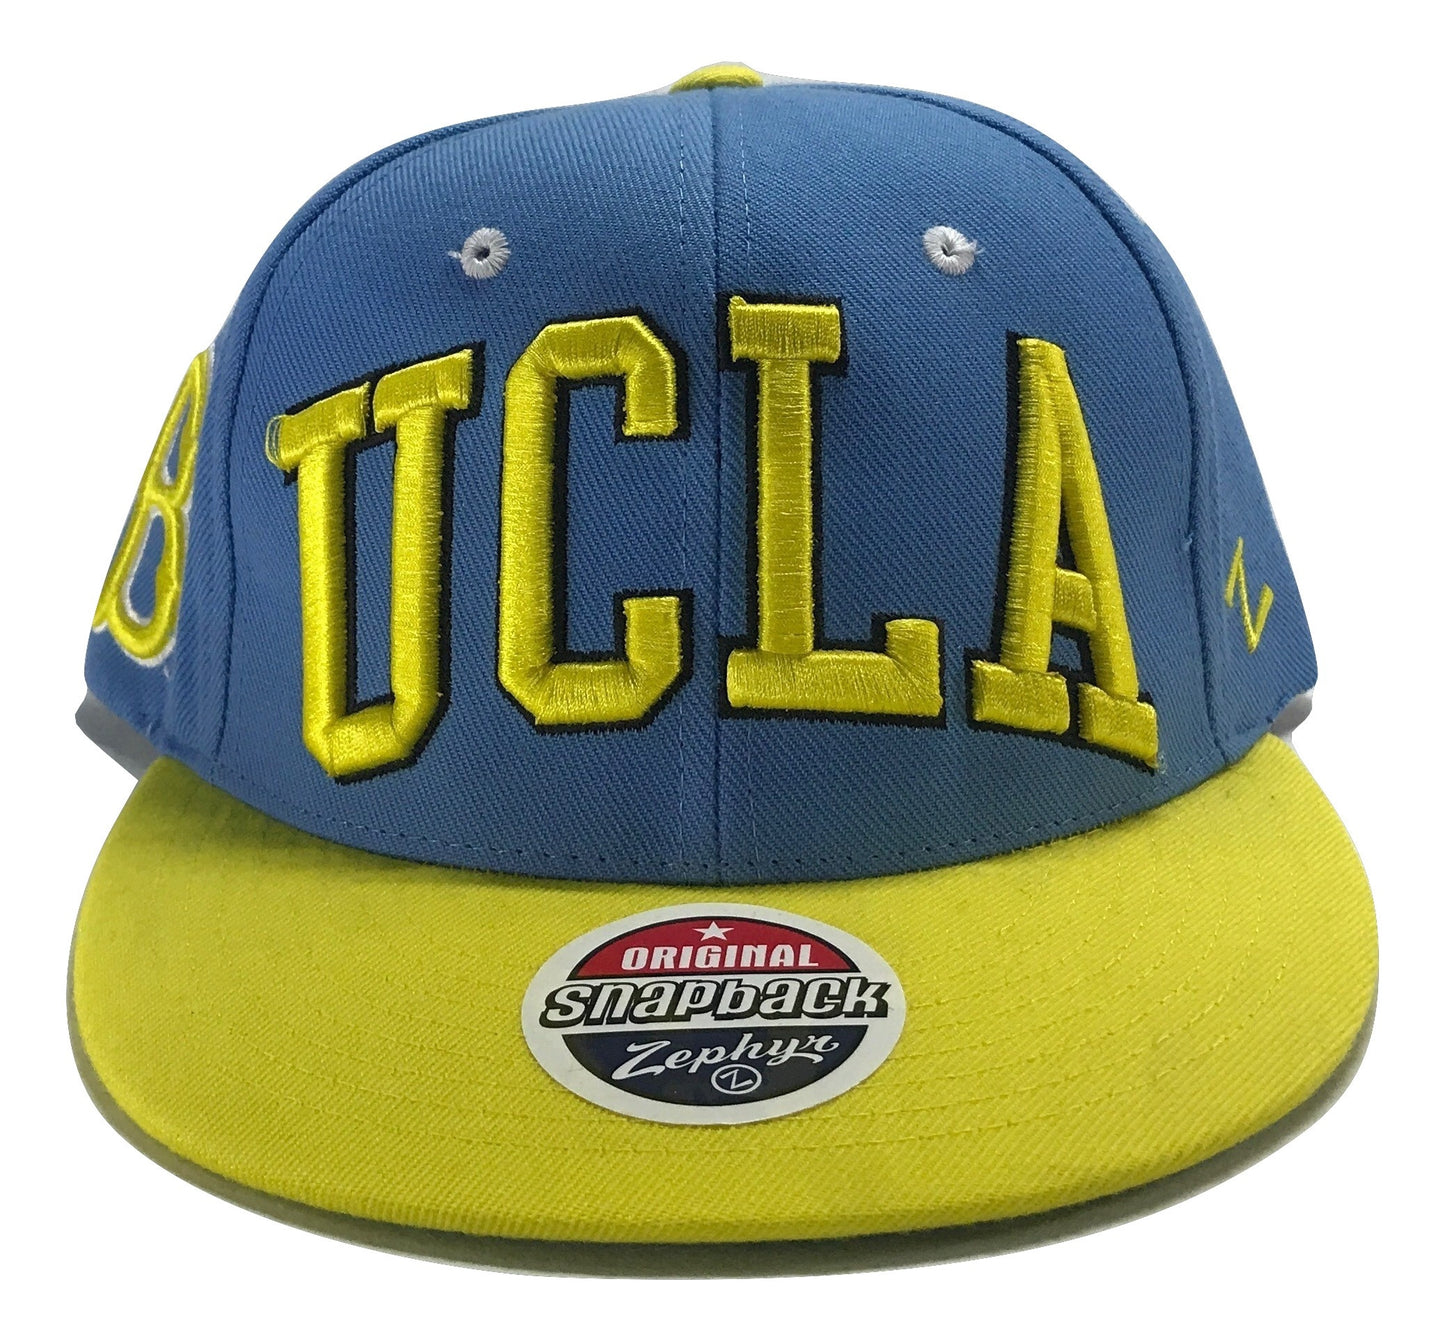 UCLA Bruins (Blue) Snapback